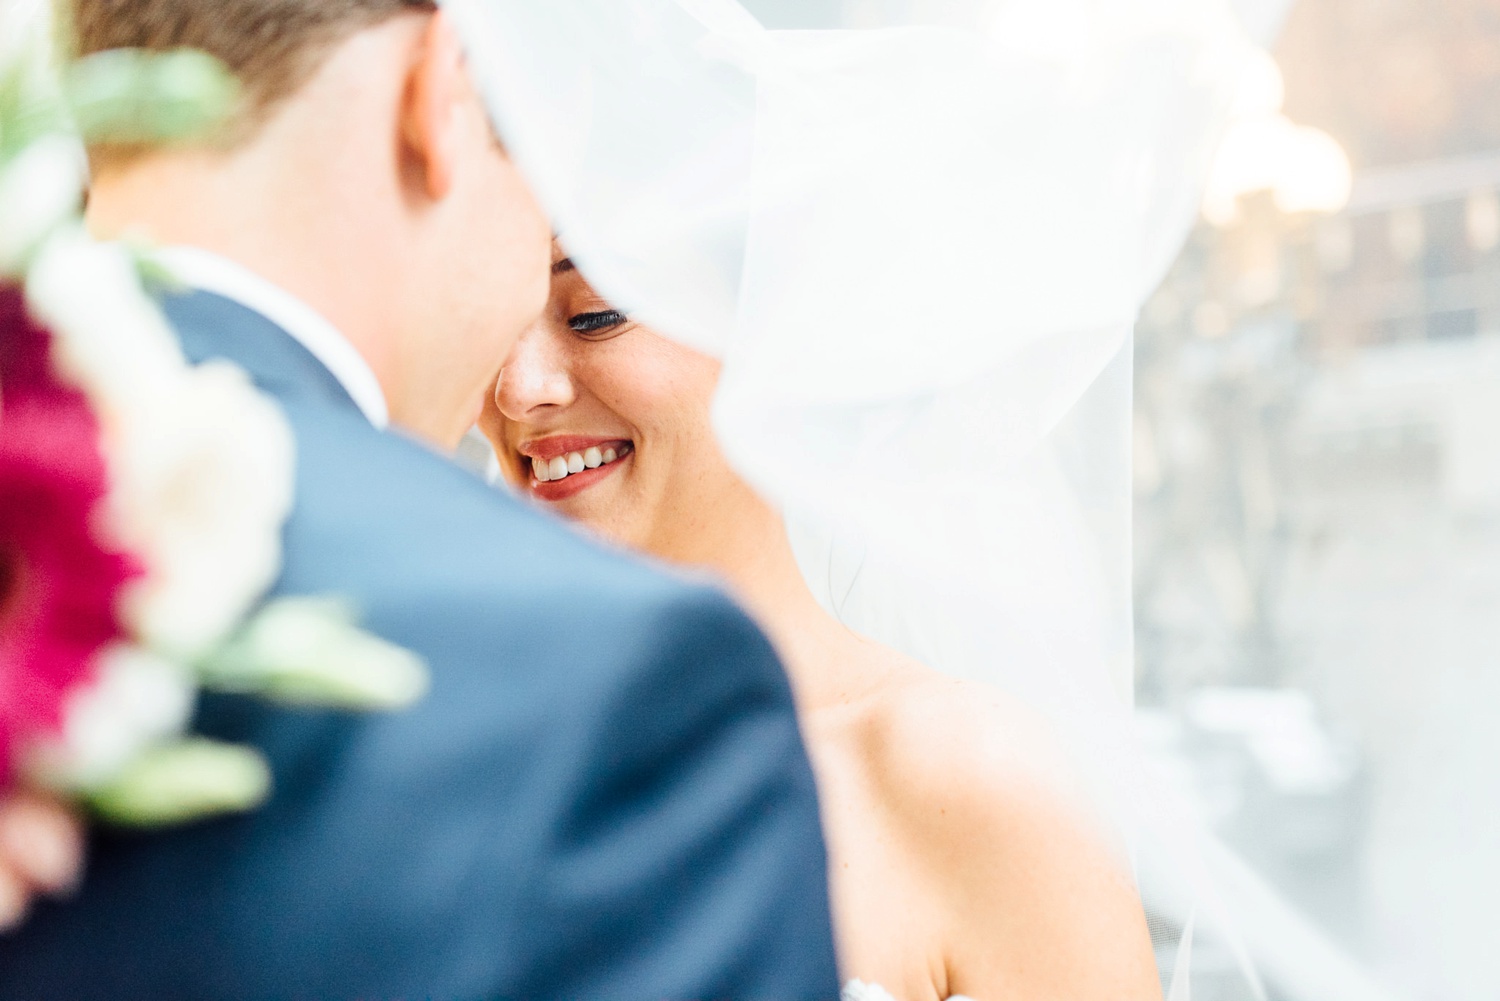 Erica + Chase - PAFA Wedding - Philadelphia Wedding Photographer - Alison Dunn Photography photo